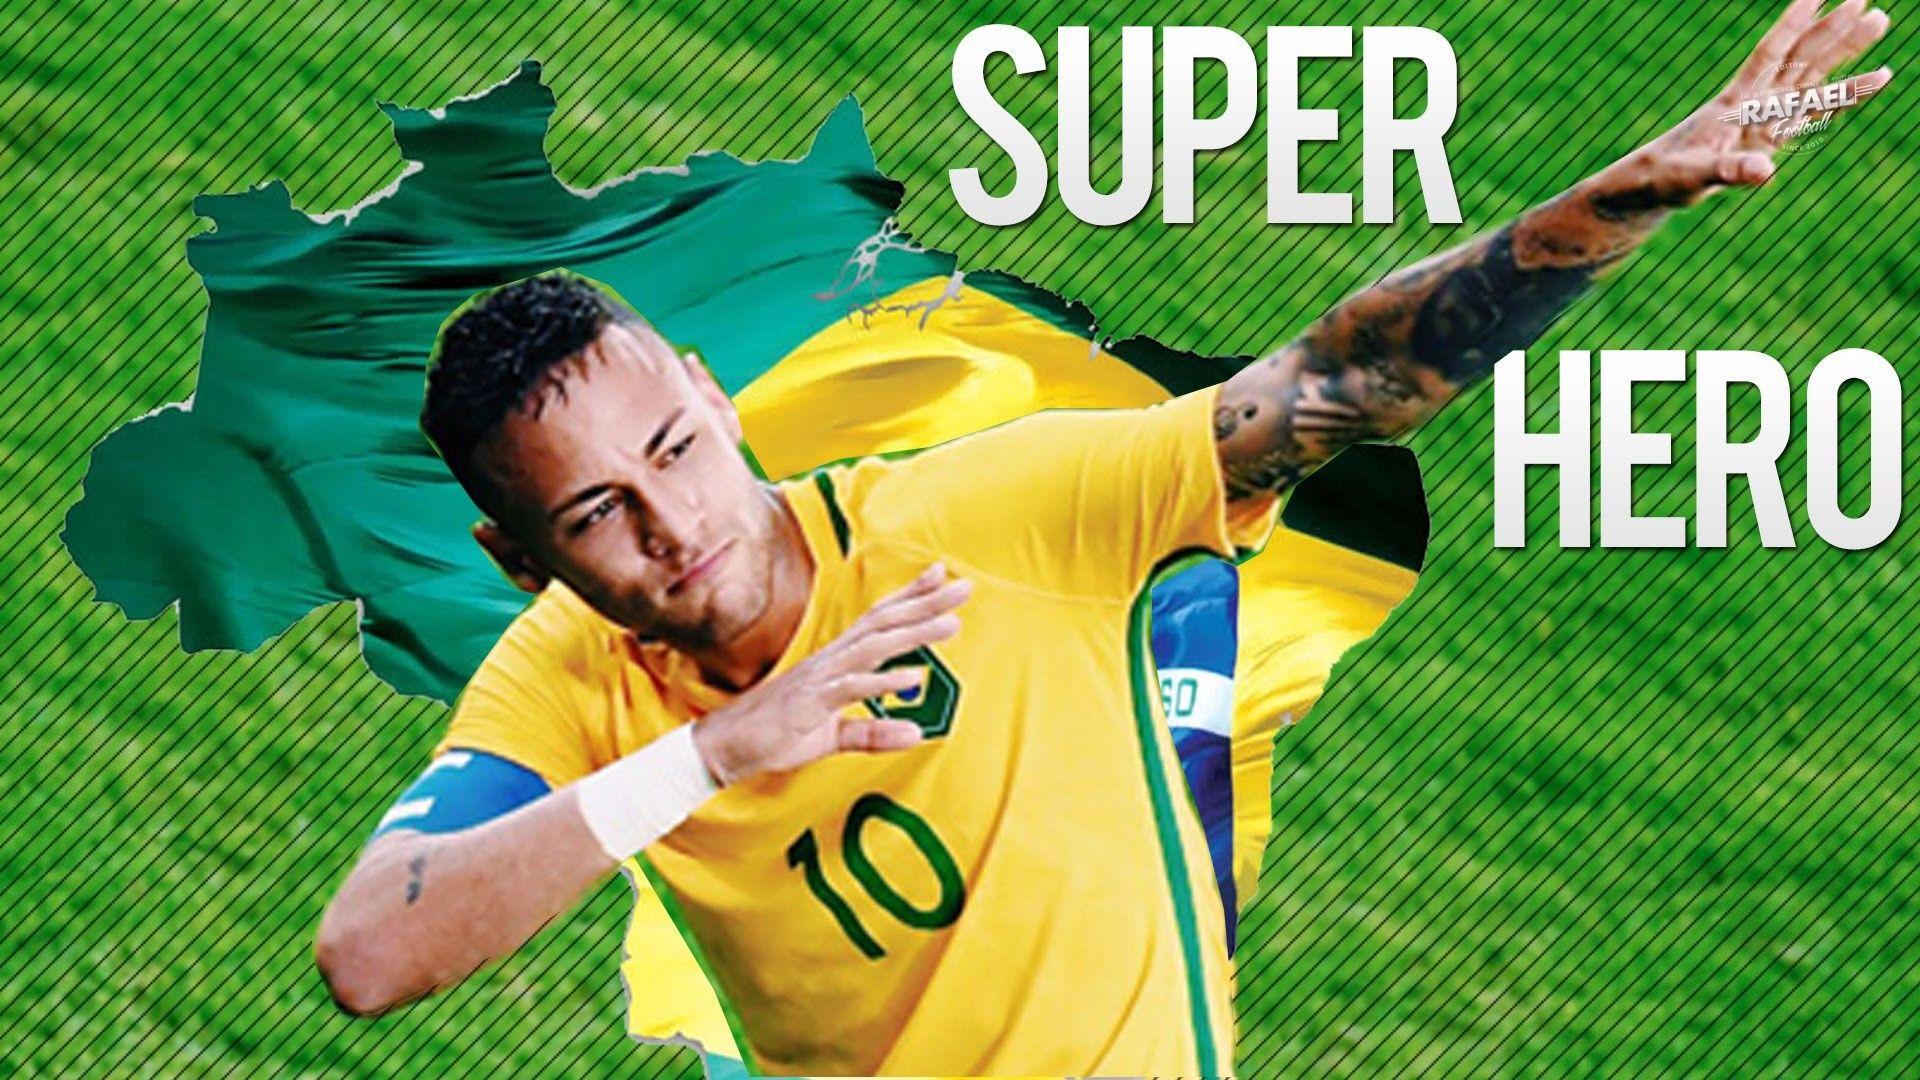 Neymar Brazil Wallpaper 2018 HD